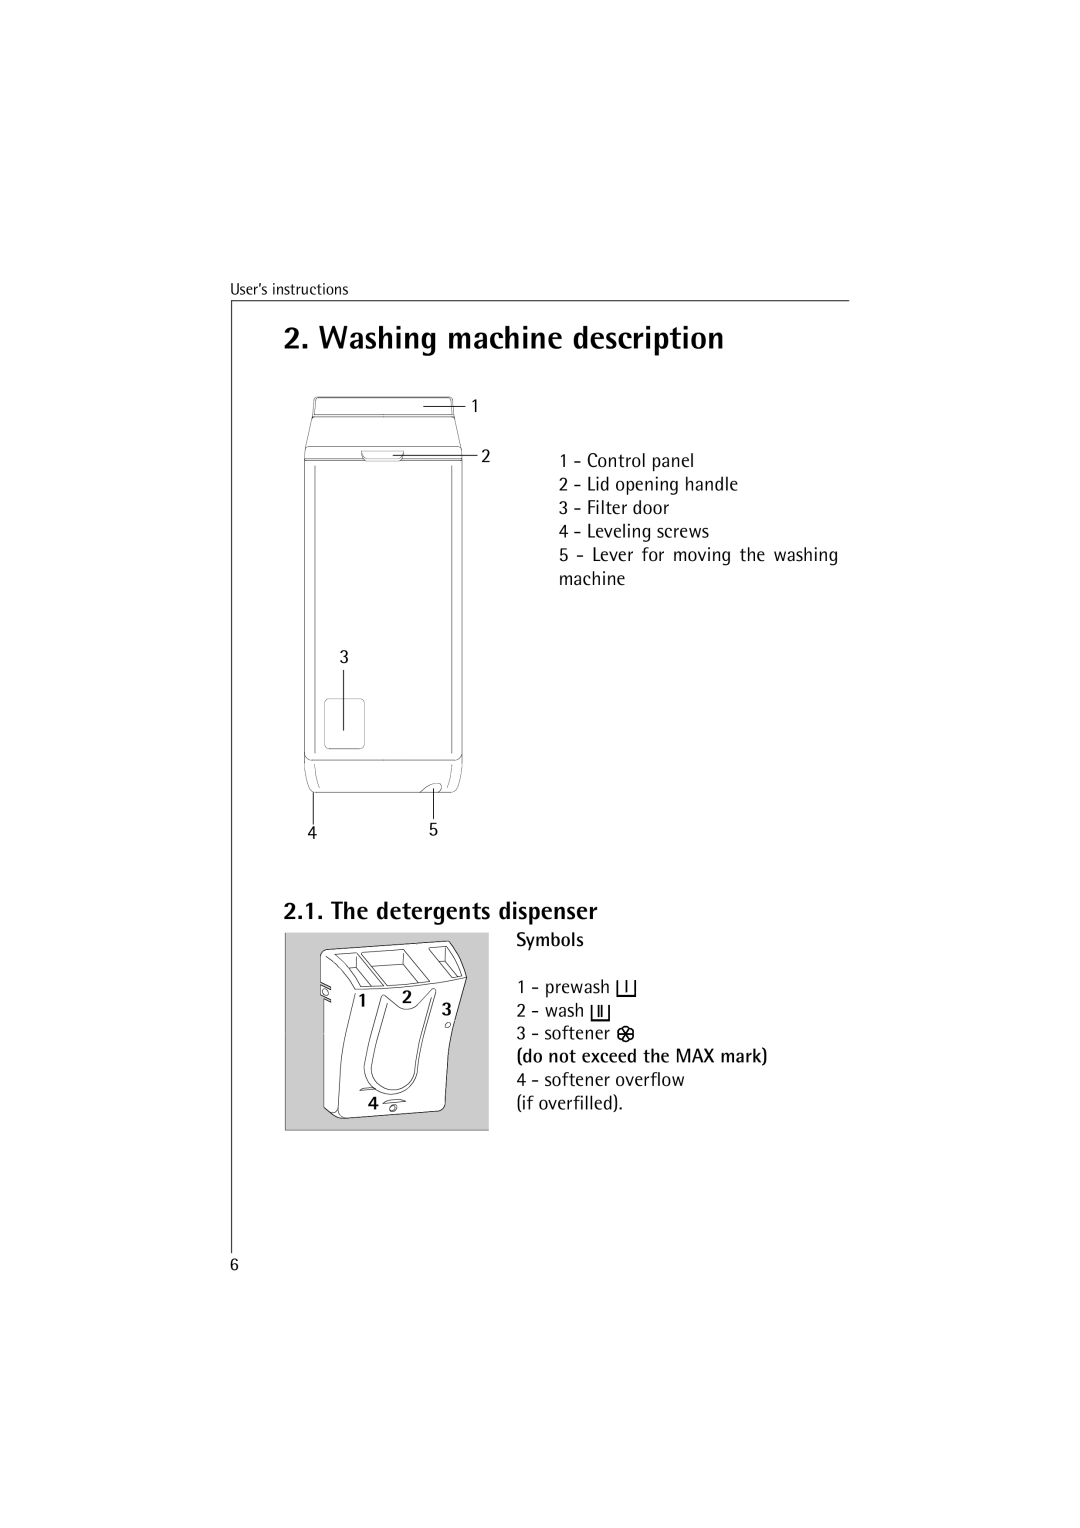 AEG 40850 manual Washing machine description, Detergents dispenser, Prewash Wash Softener, Softener overflow If overfilled 